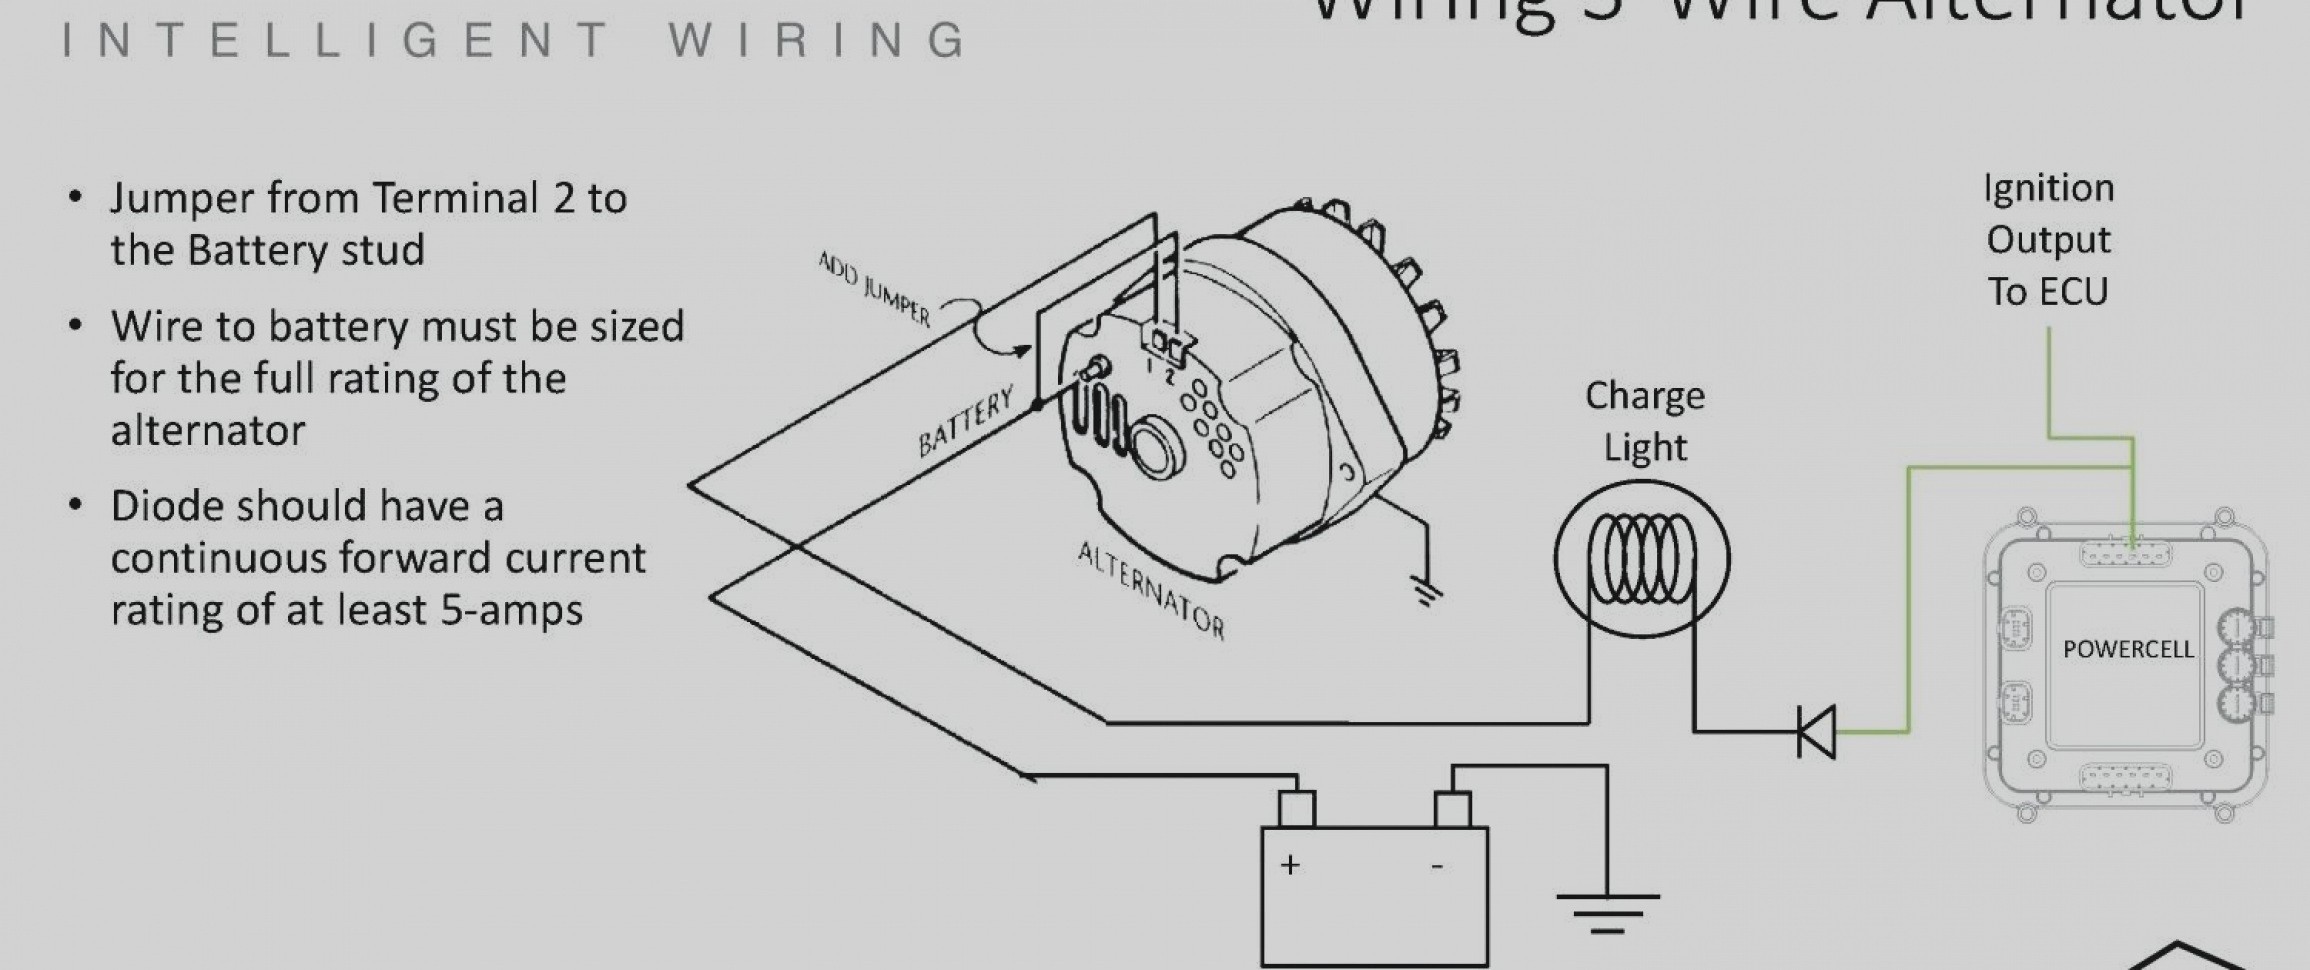 Car Alternator Circuit Diagram 4 Wire Gm Alternator Wiring Diagram Wiring Diagram toolbox Of Car Alternator Circuit Diagram